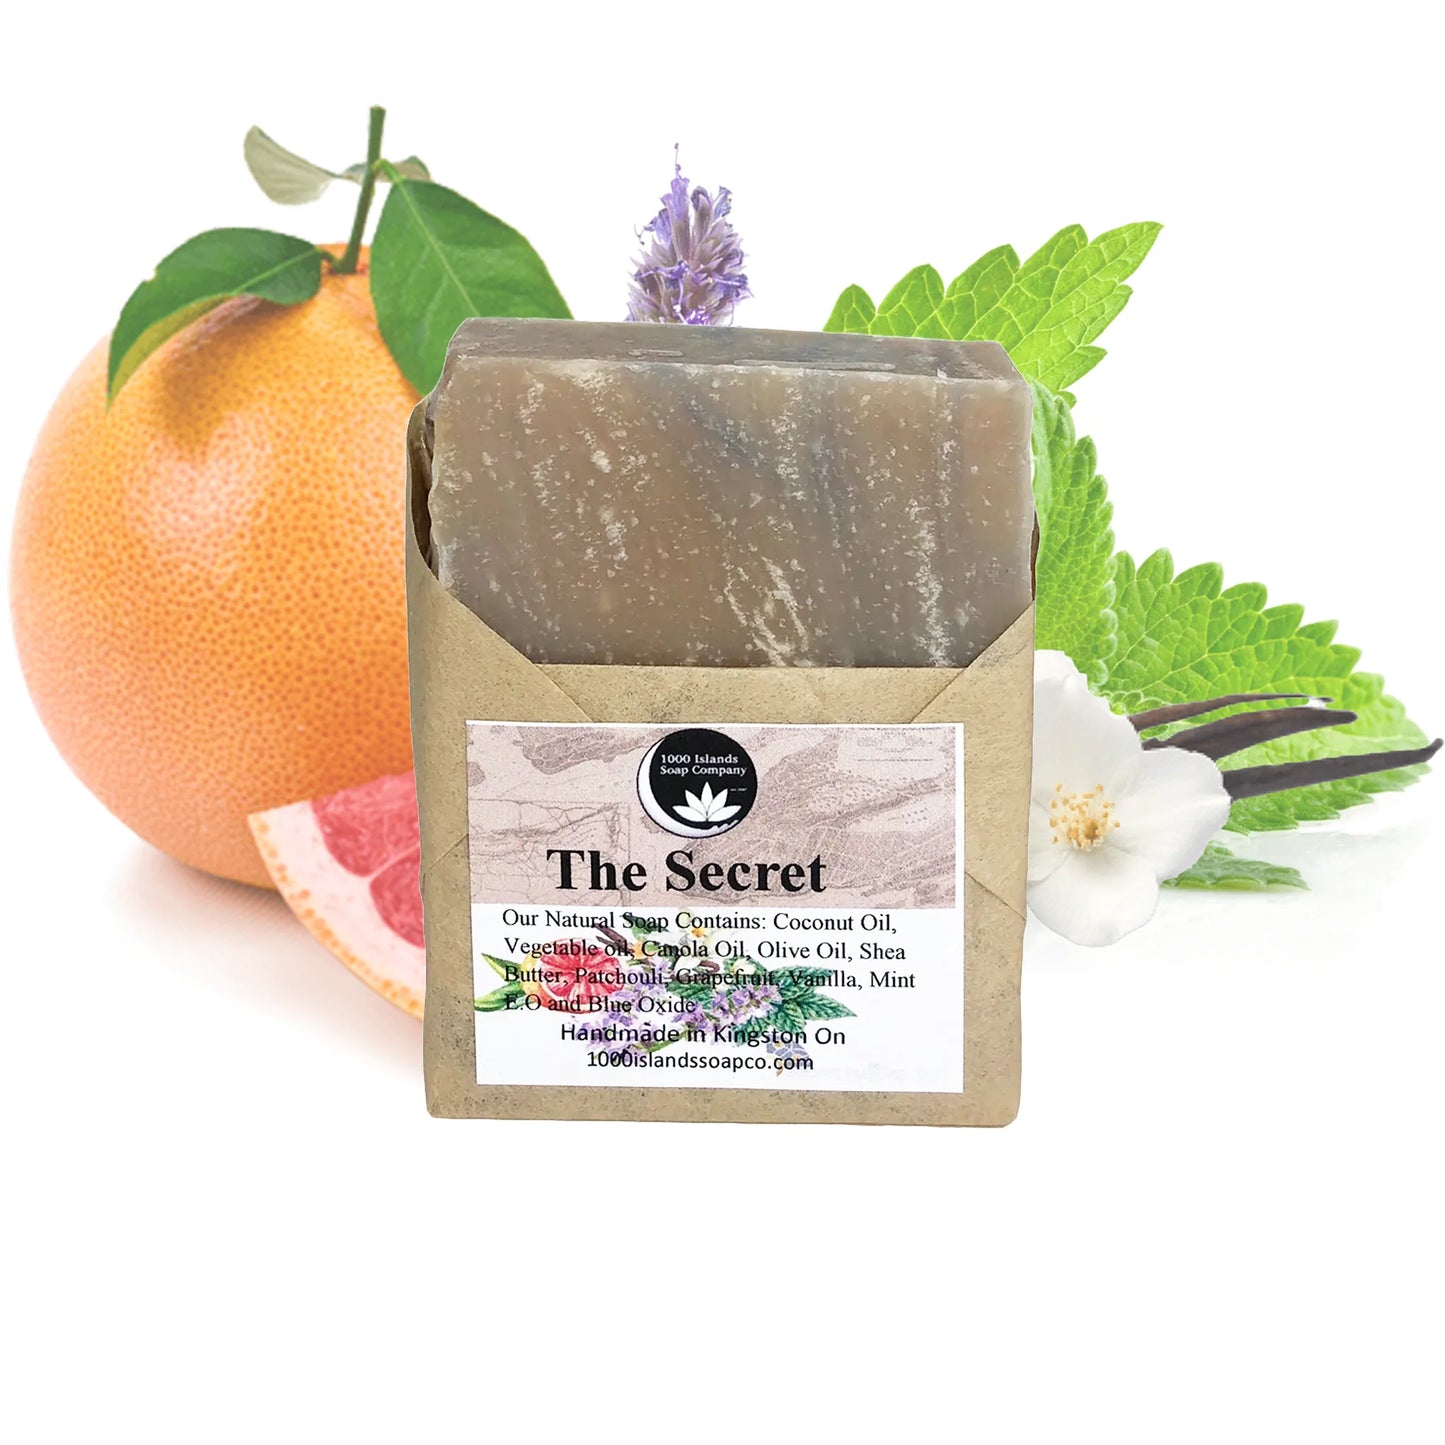 The Secret Natural Soap Bar